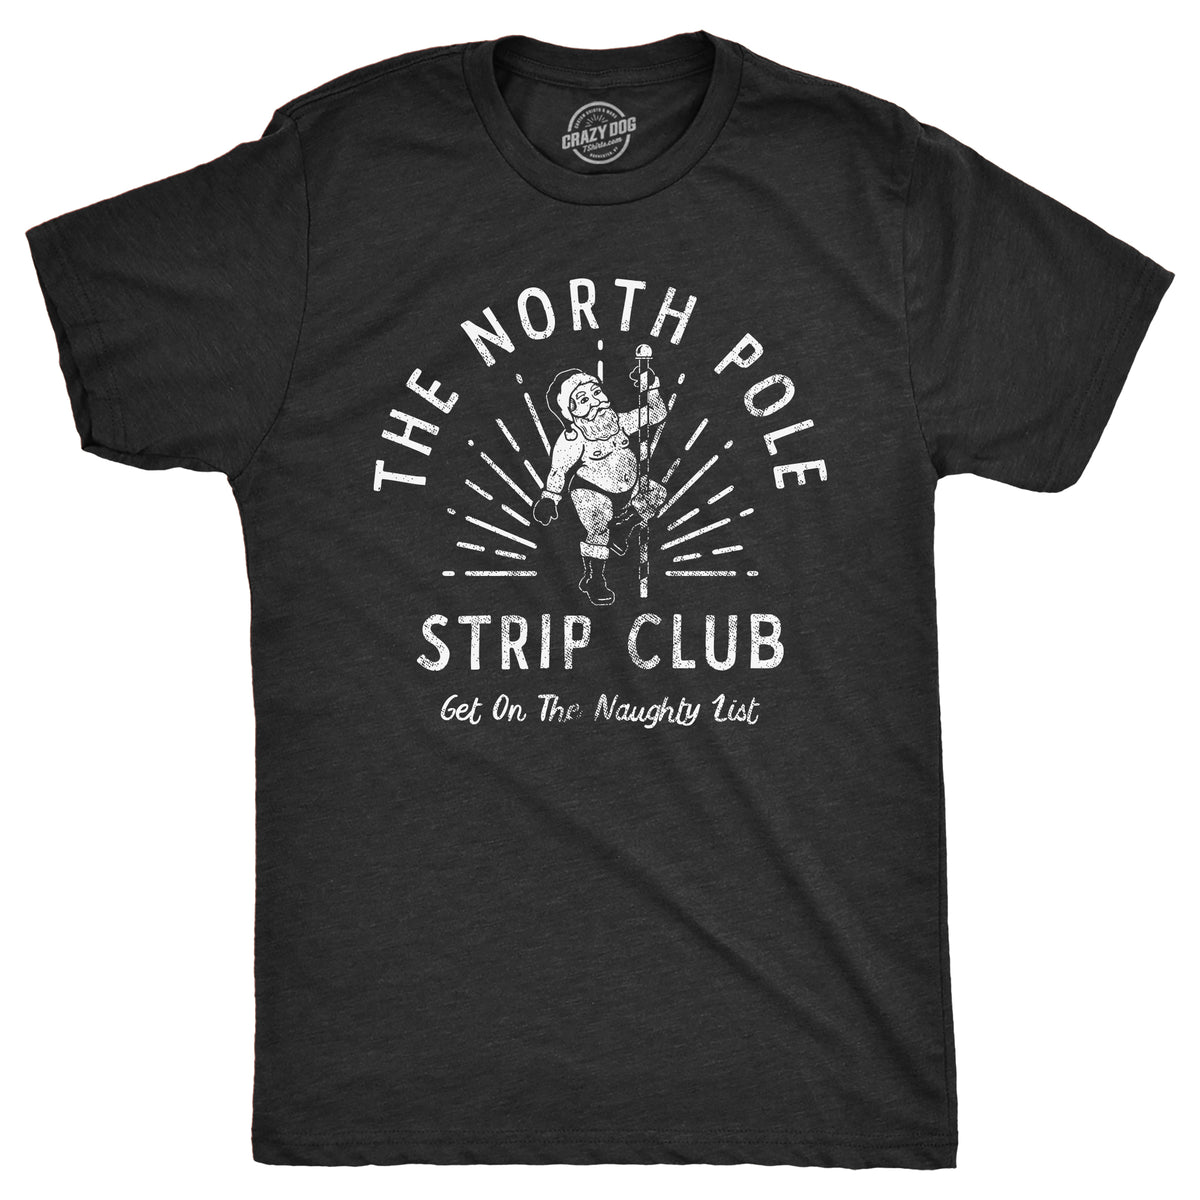 Funny Heather Black - Strip Club North Pole Strip Club Mens T Shirt Nerdy Christmas sex Tee